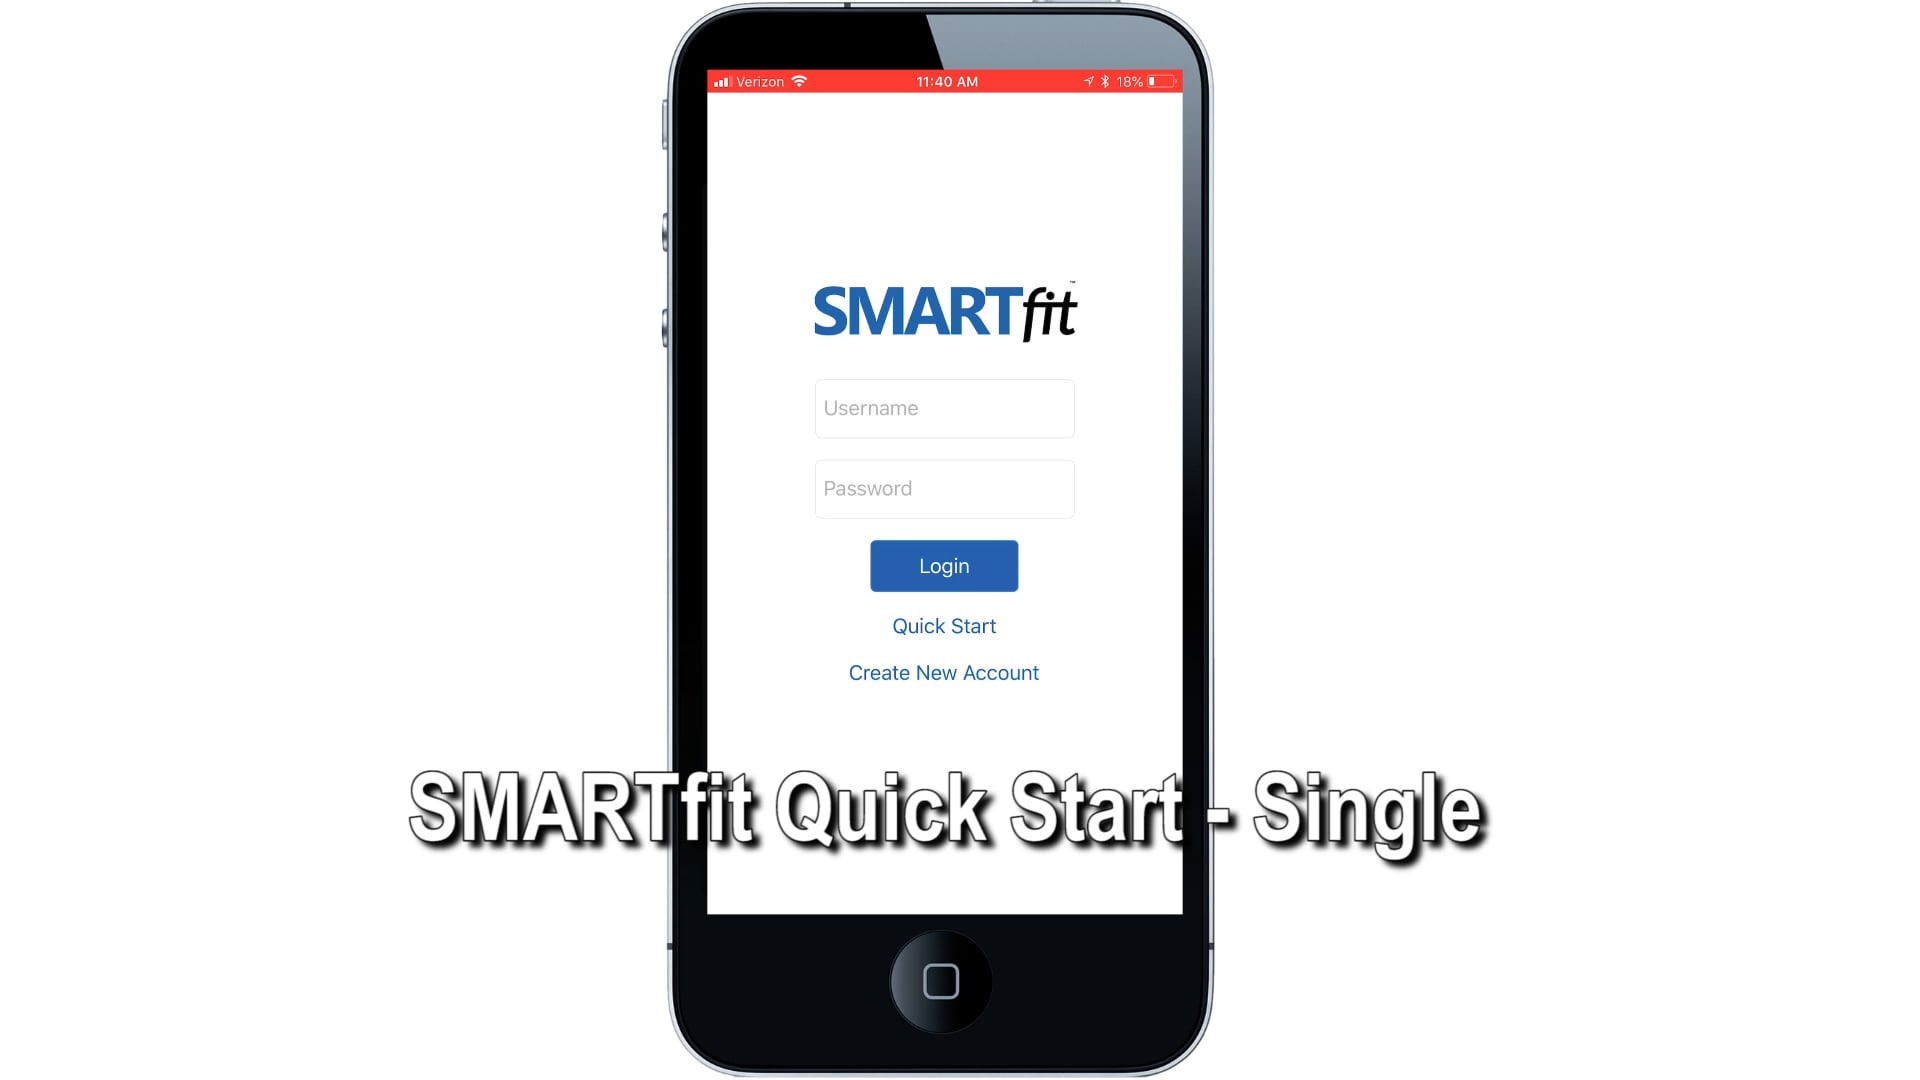 SMARTfit Quick Start - Single